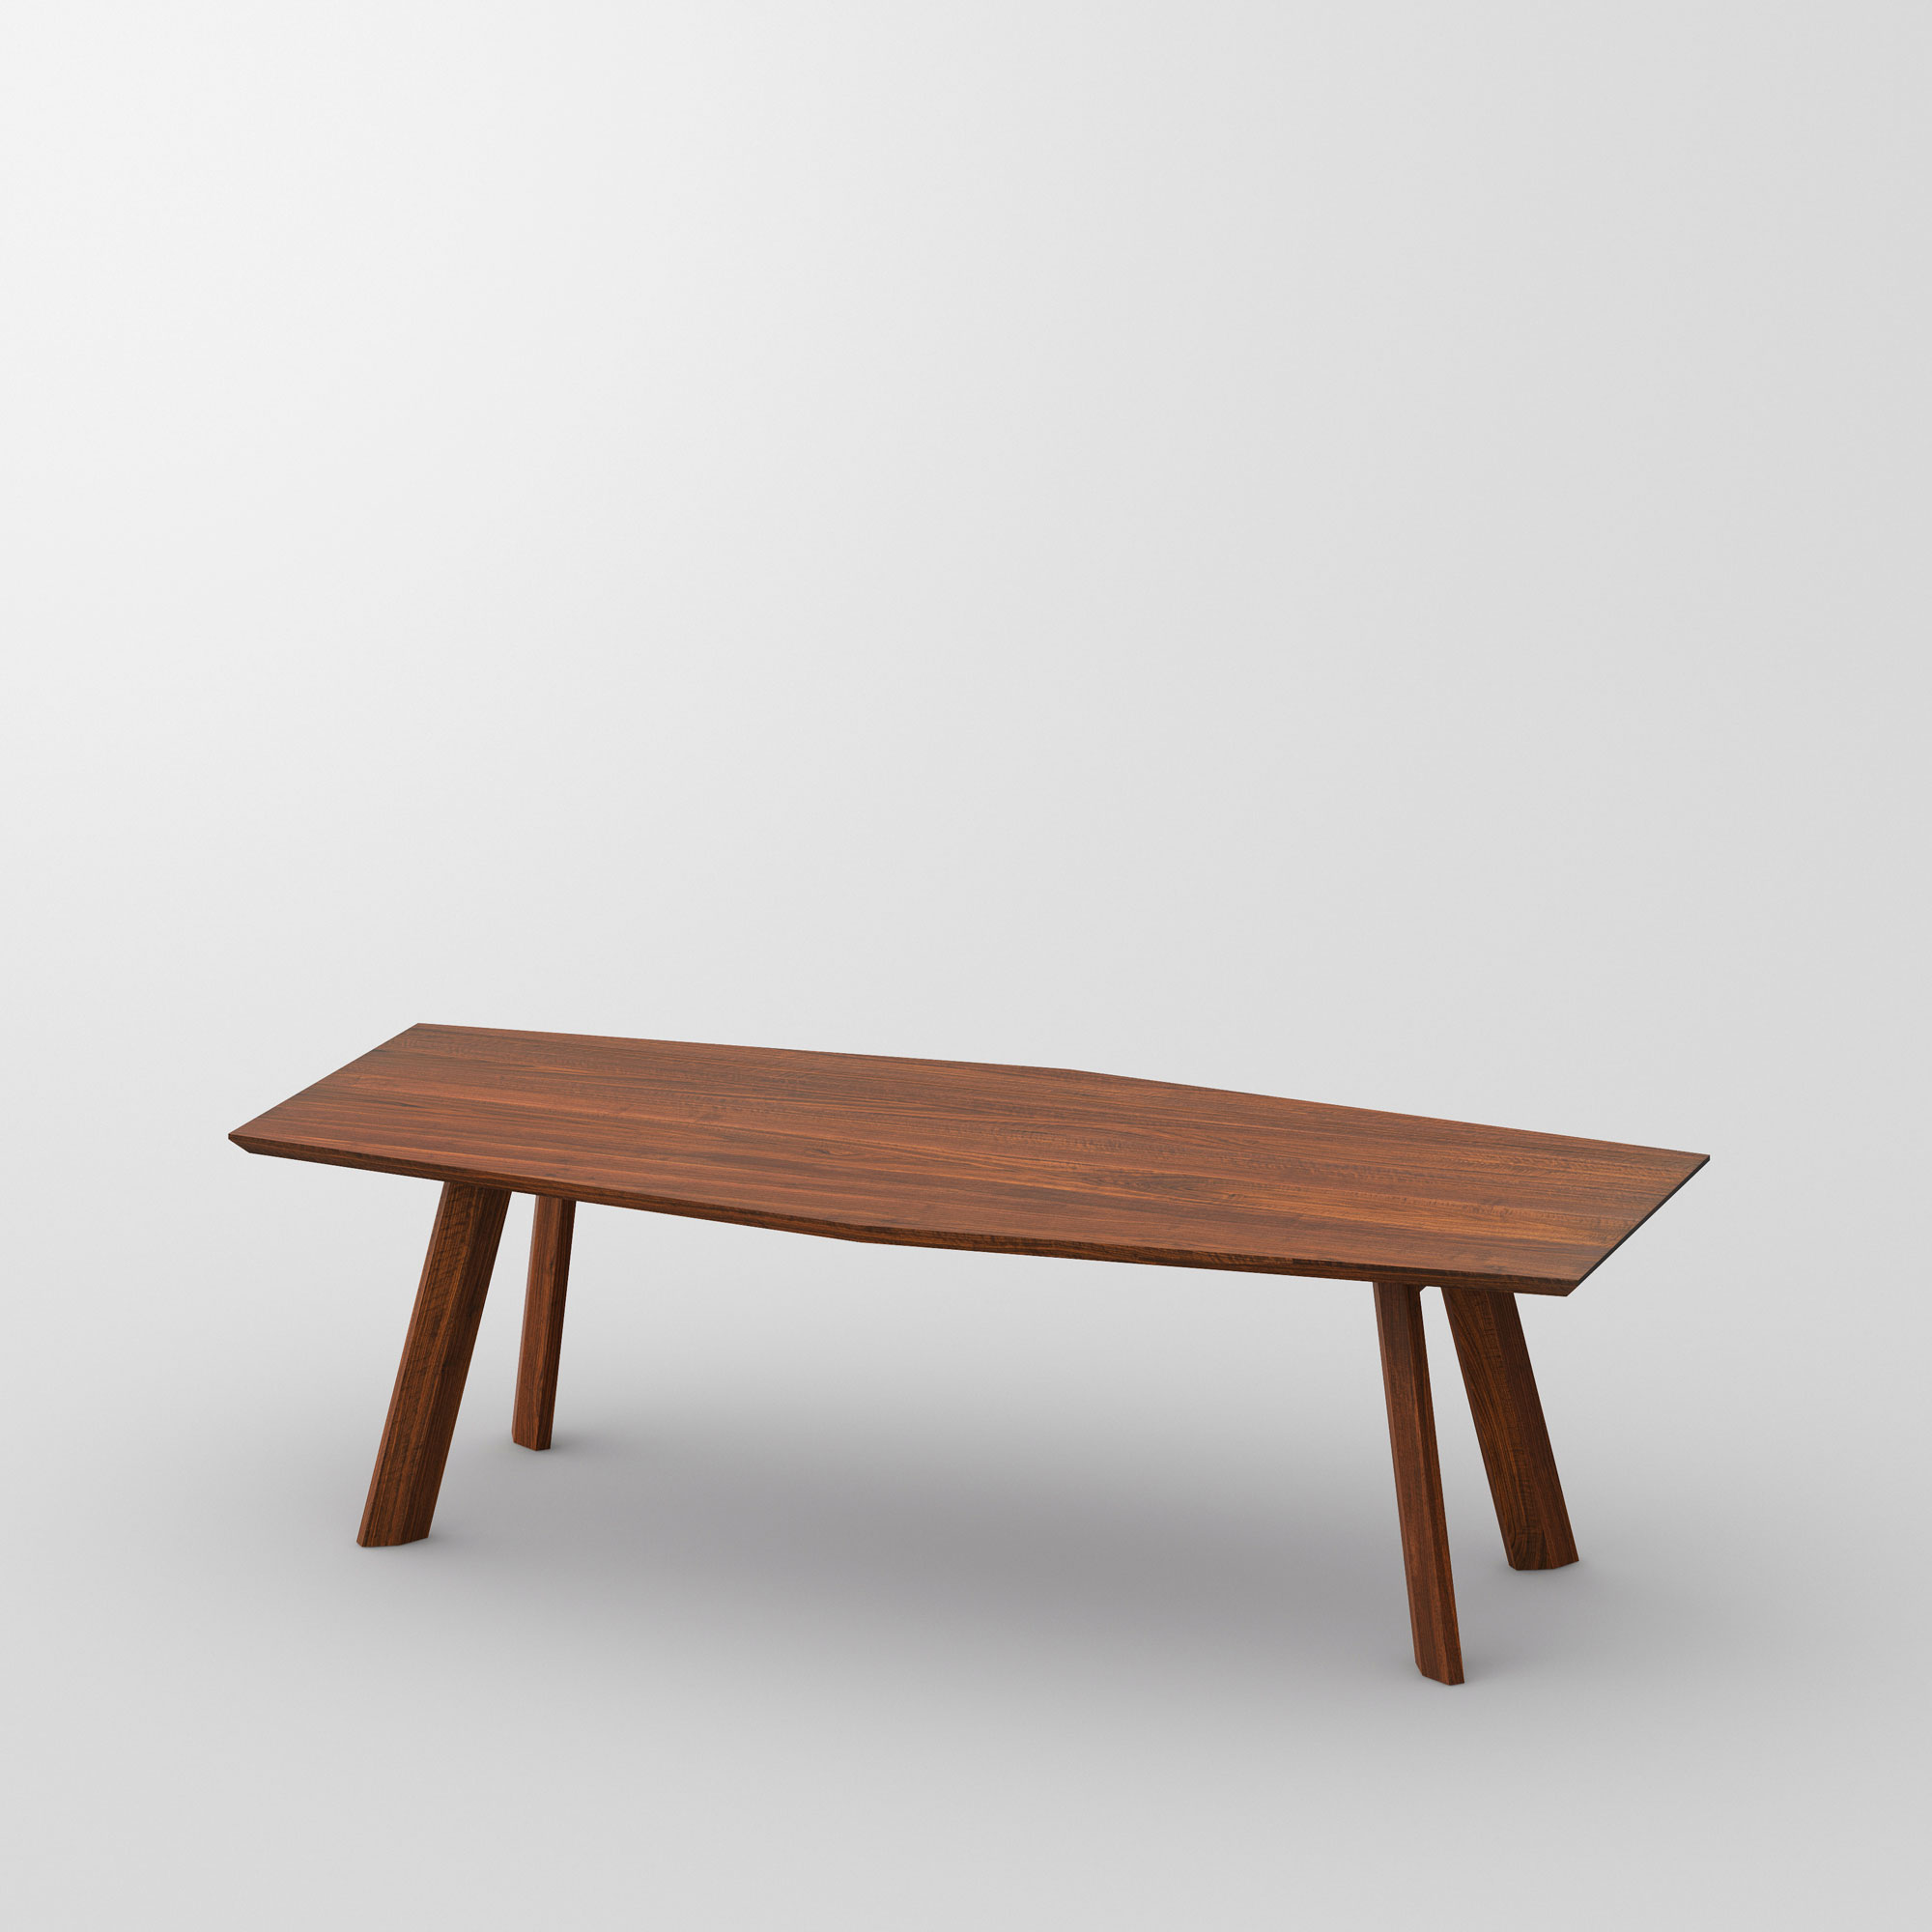 Designer Dining Table RHOMBI cam1 custom made in solid wood by vitamin design